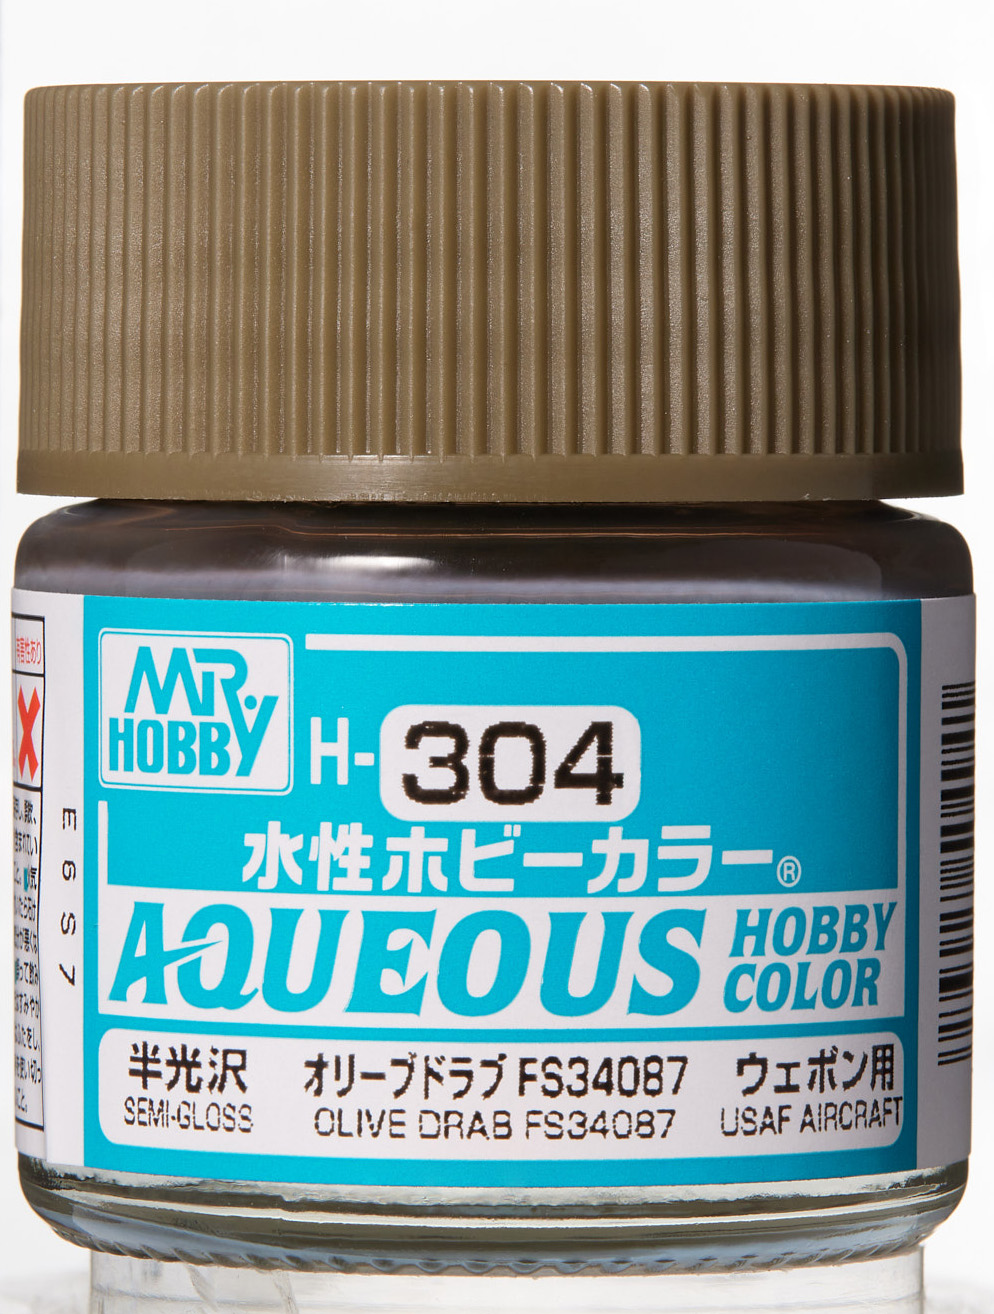 Mr. Aqueous Hobby Color - Olive Drab FS34087 - H304 - Oliv Grün FS34087